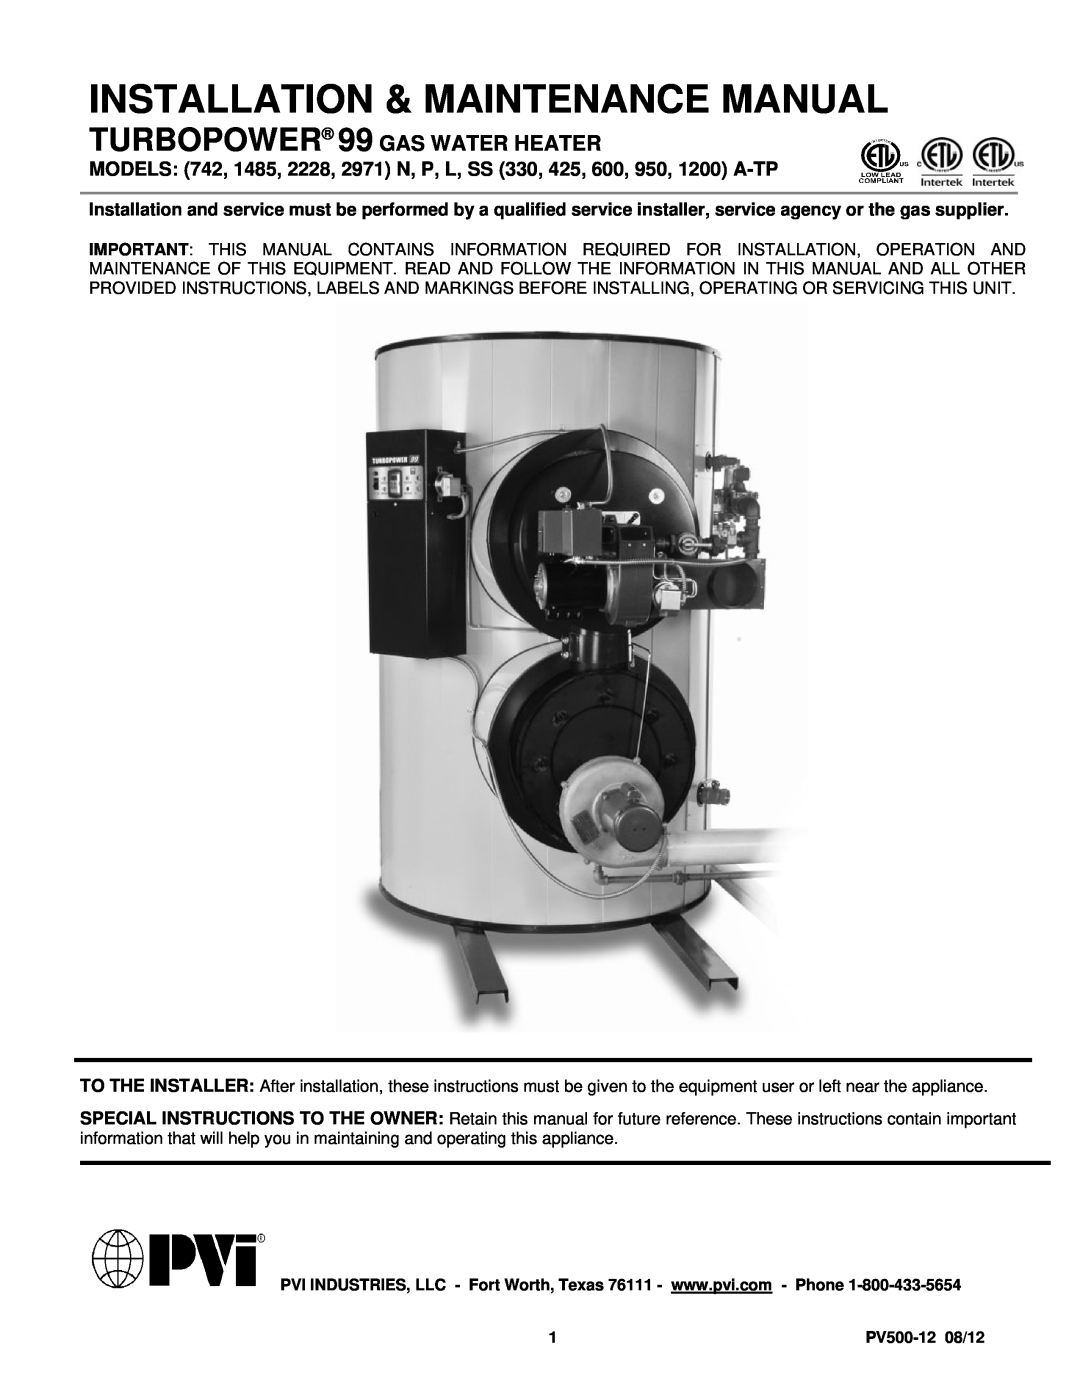 PVI Industries PV500-12 manual Installation & Maintenance Manual, TURBOPOWER 99 GAS WATER HEATER 